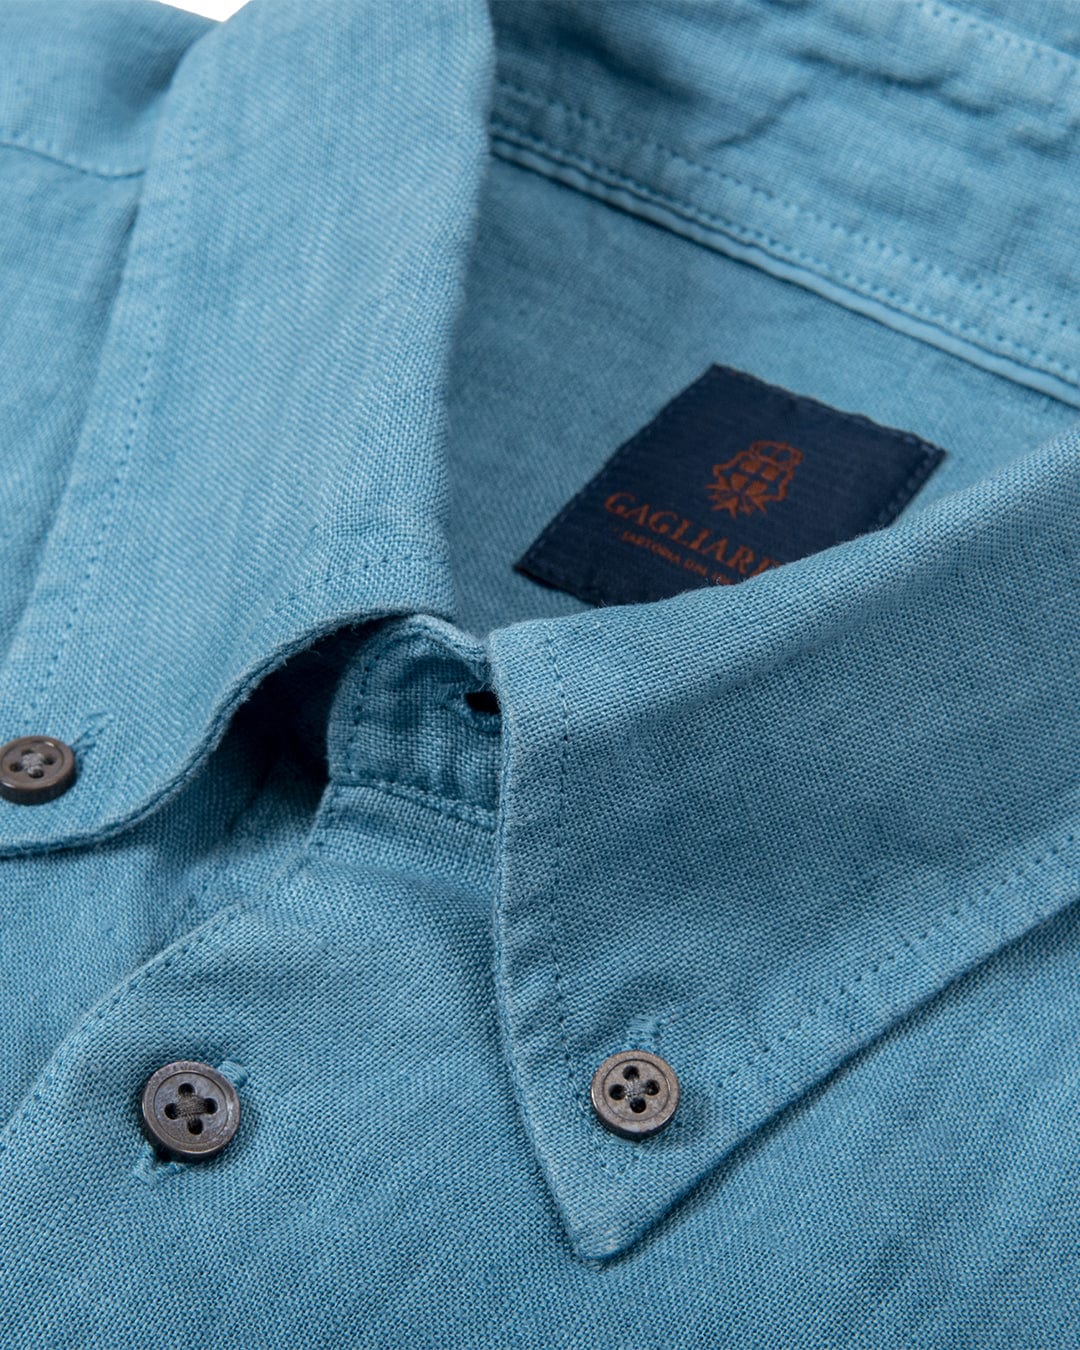 Gagliardi Shirts Gagliardi Blue Slim Fit Linen Button-Down Shirt